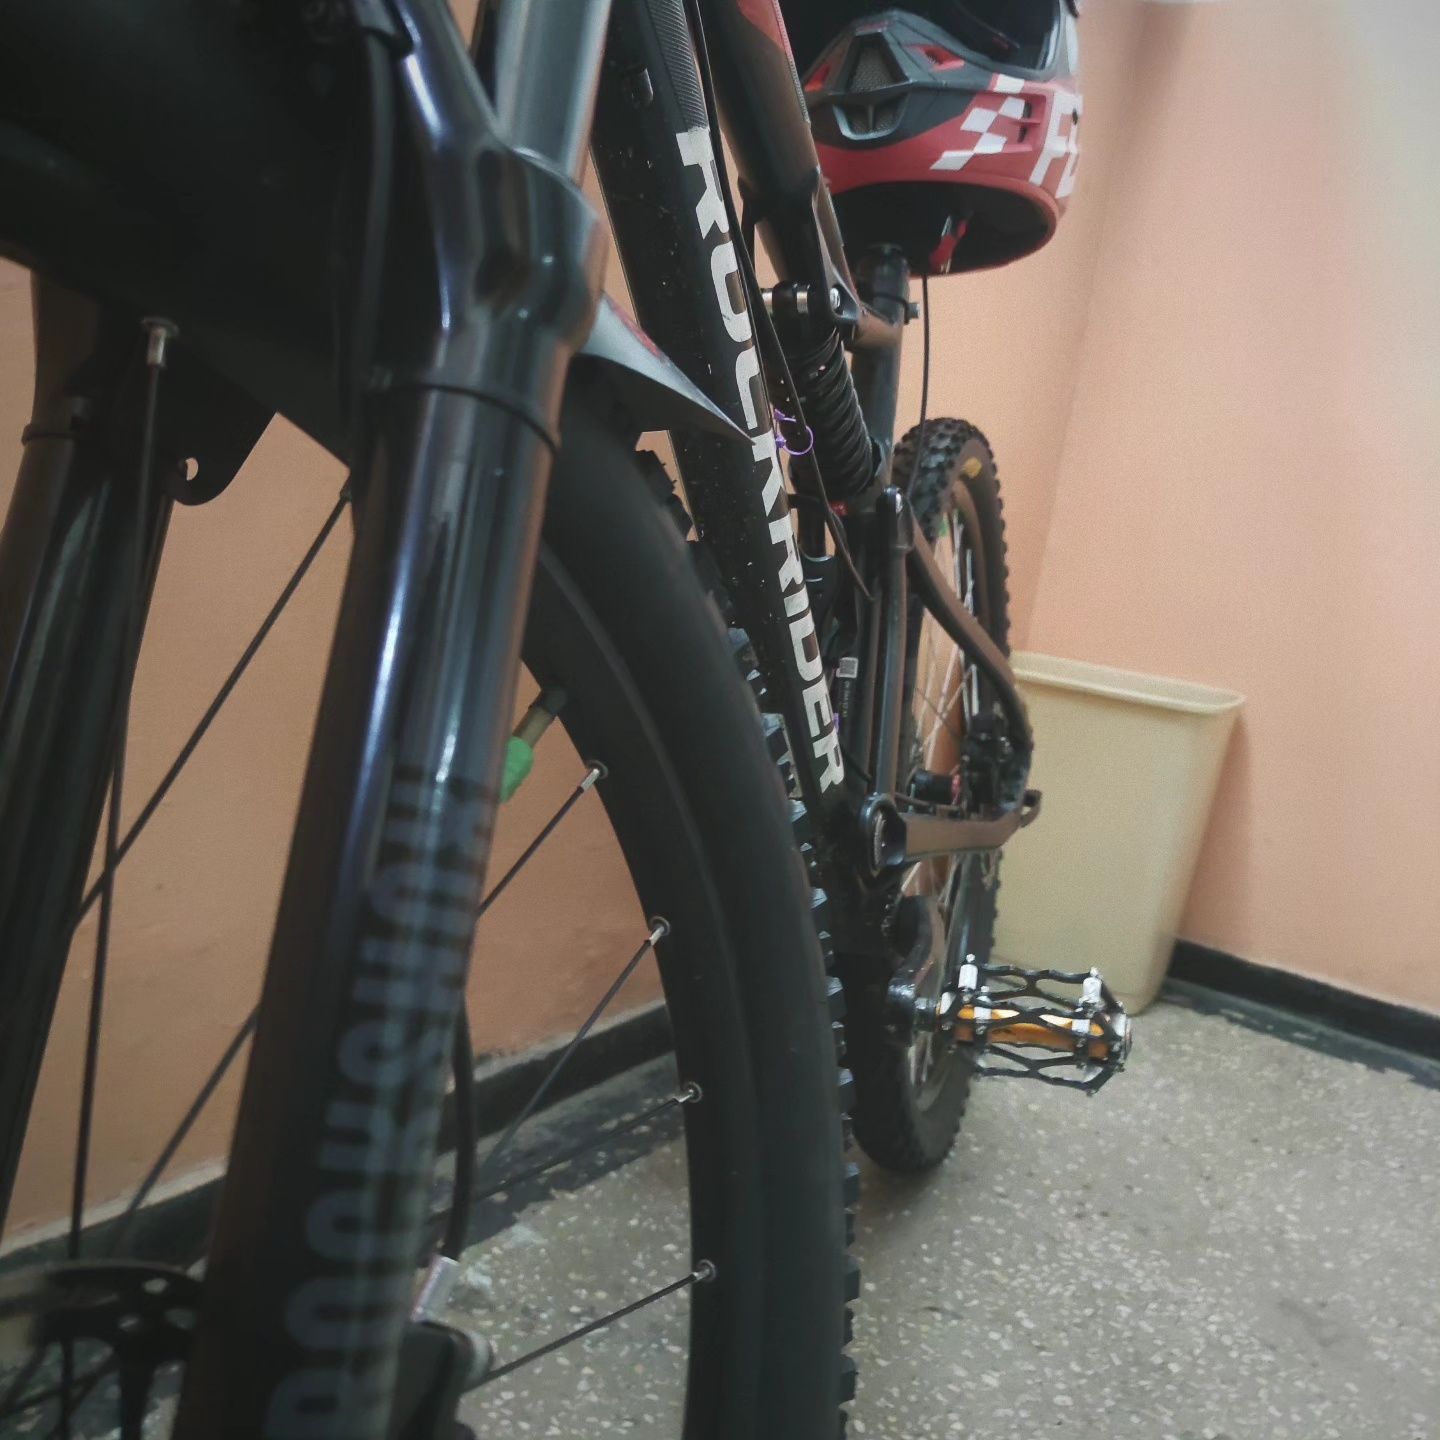 ‼️ Vând urgent Bicicleta rockrider st 530 s‼️